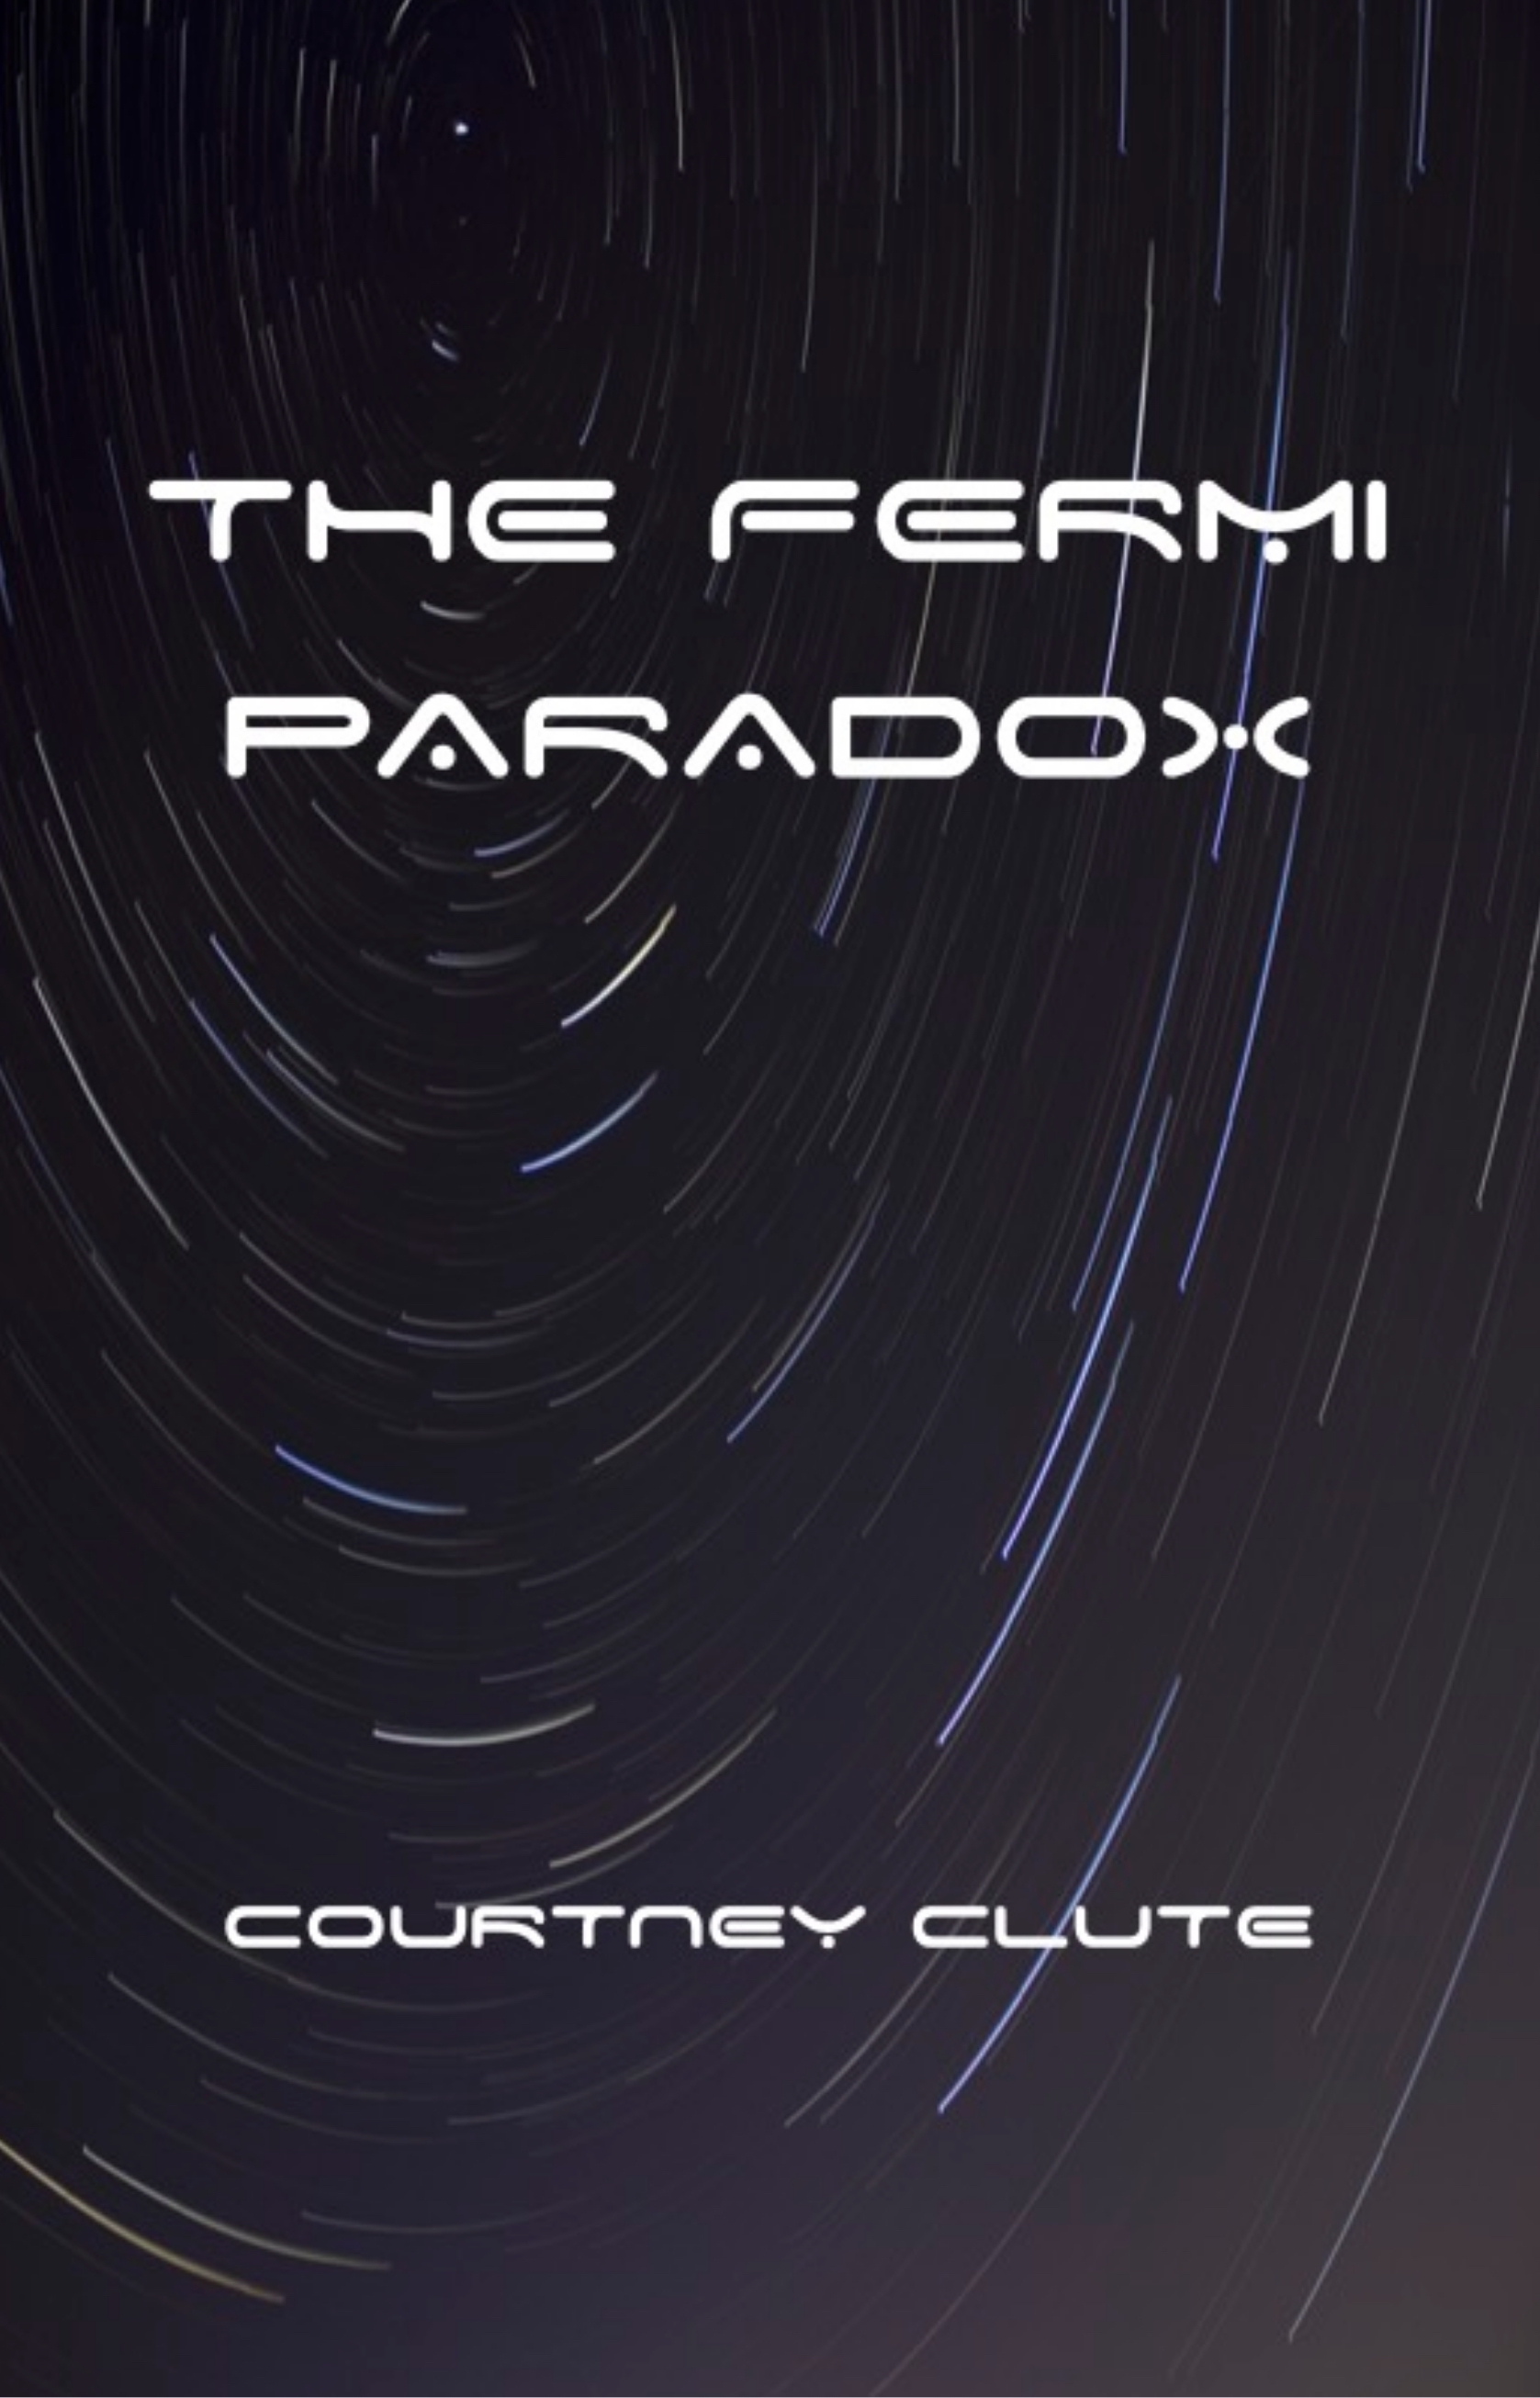 cover of the Fermi Paradox book